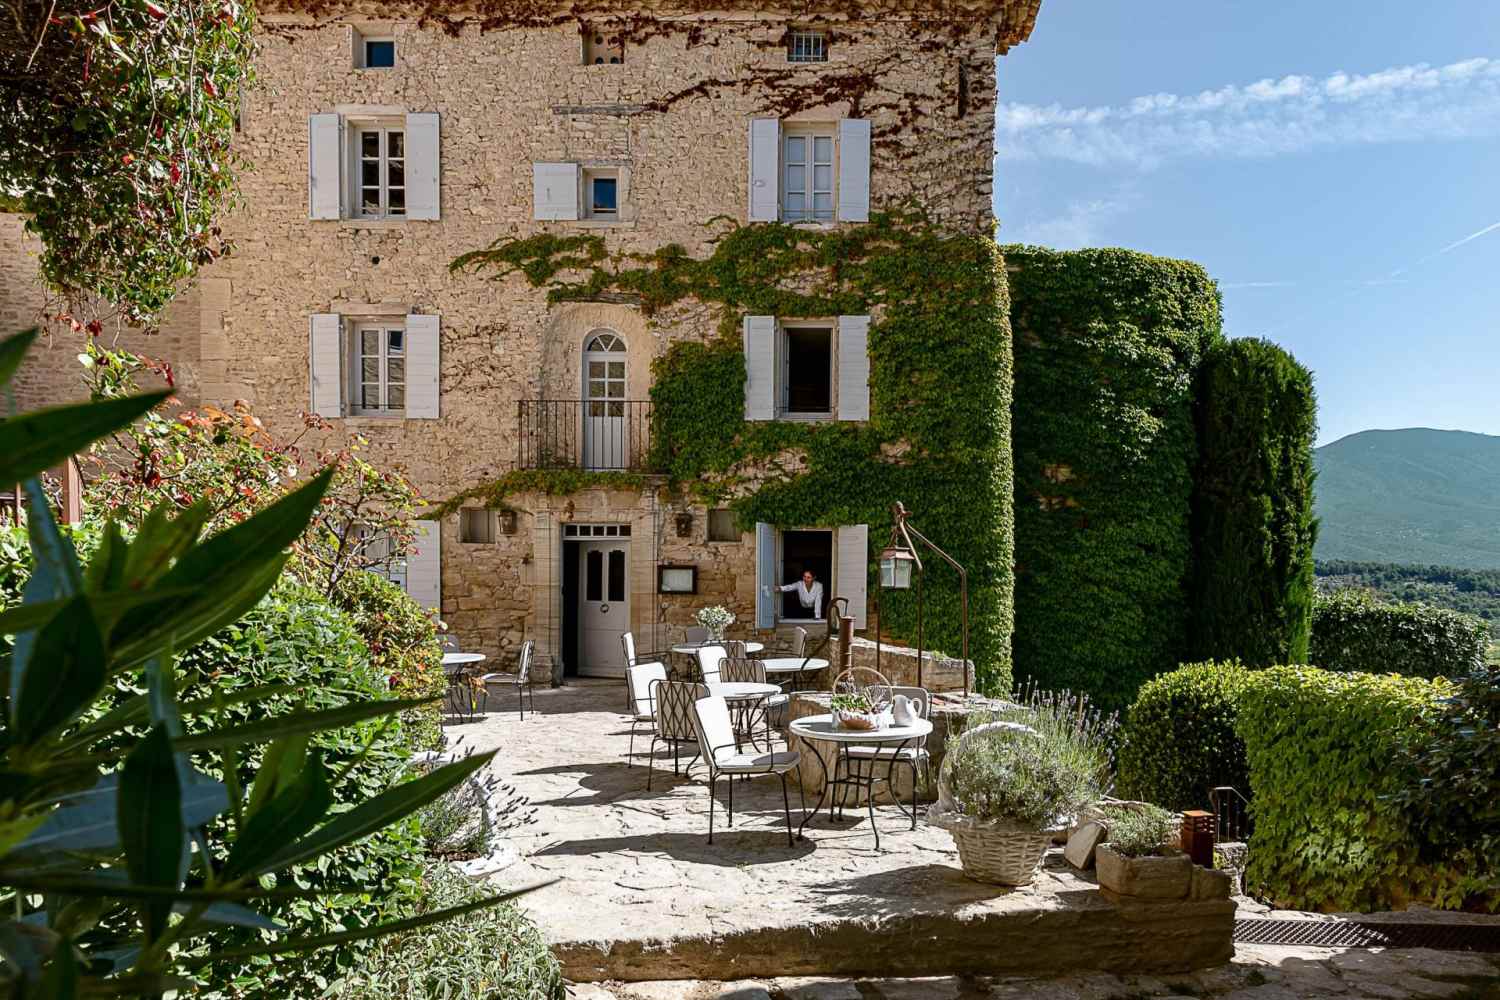 Hôtel Crillon le Brave, Provence - France